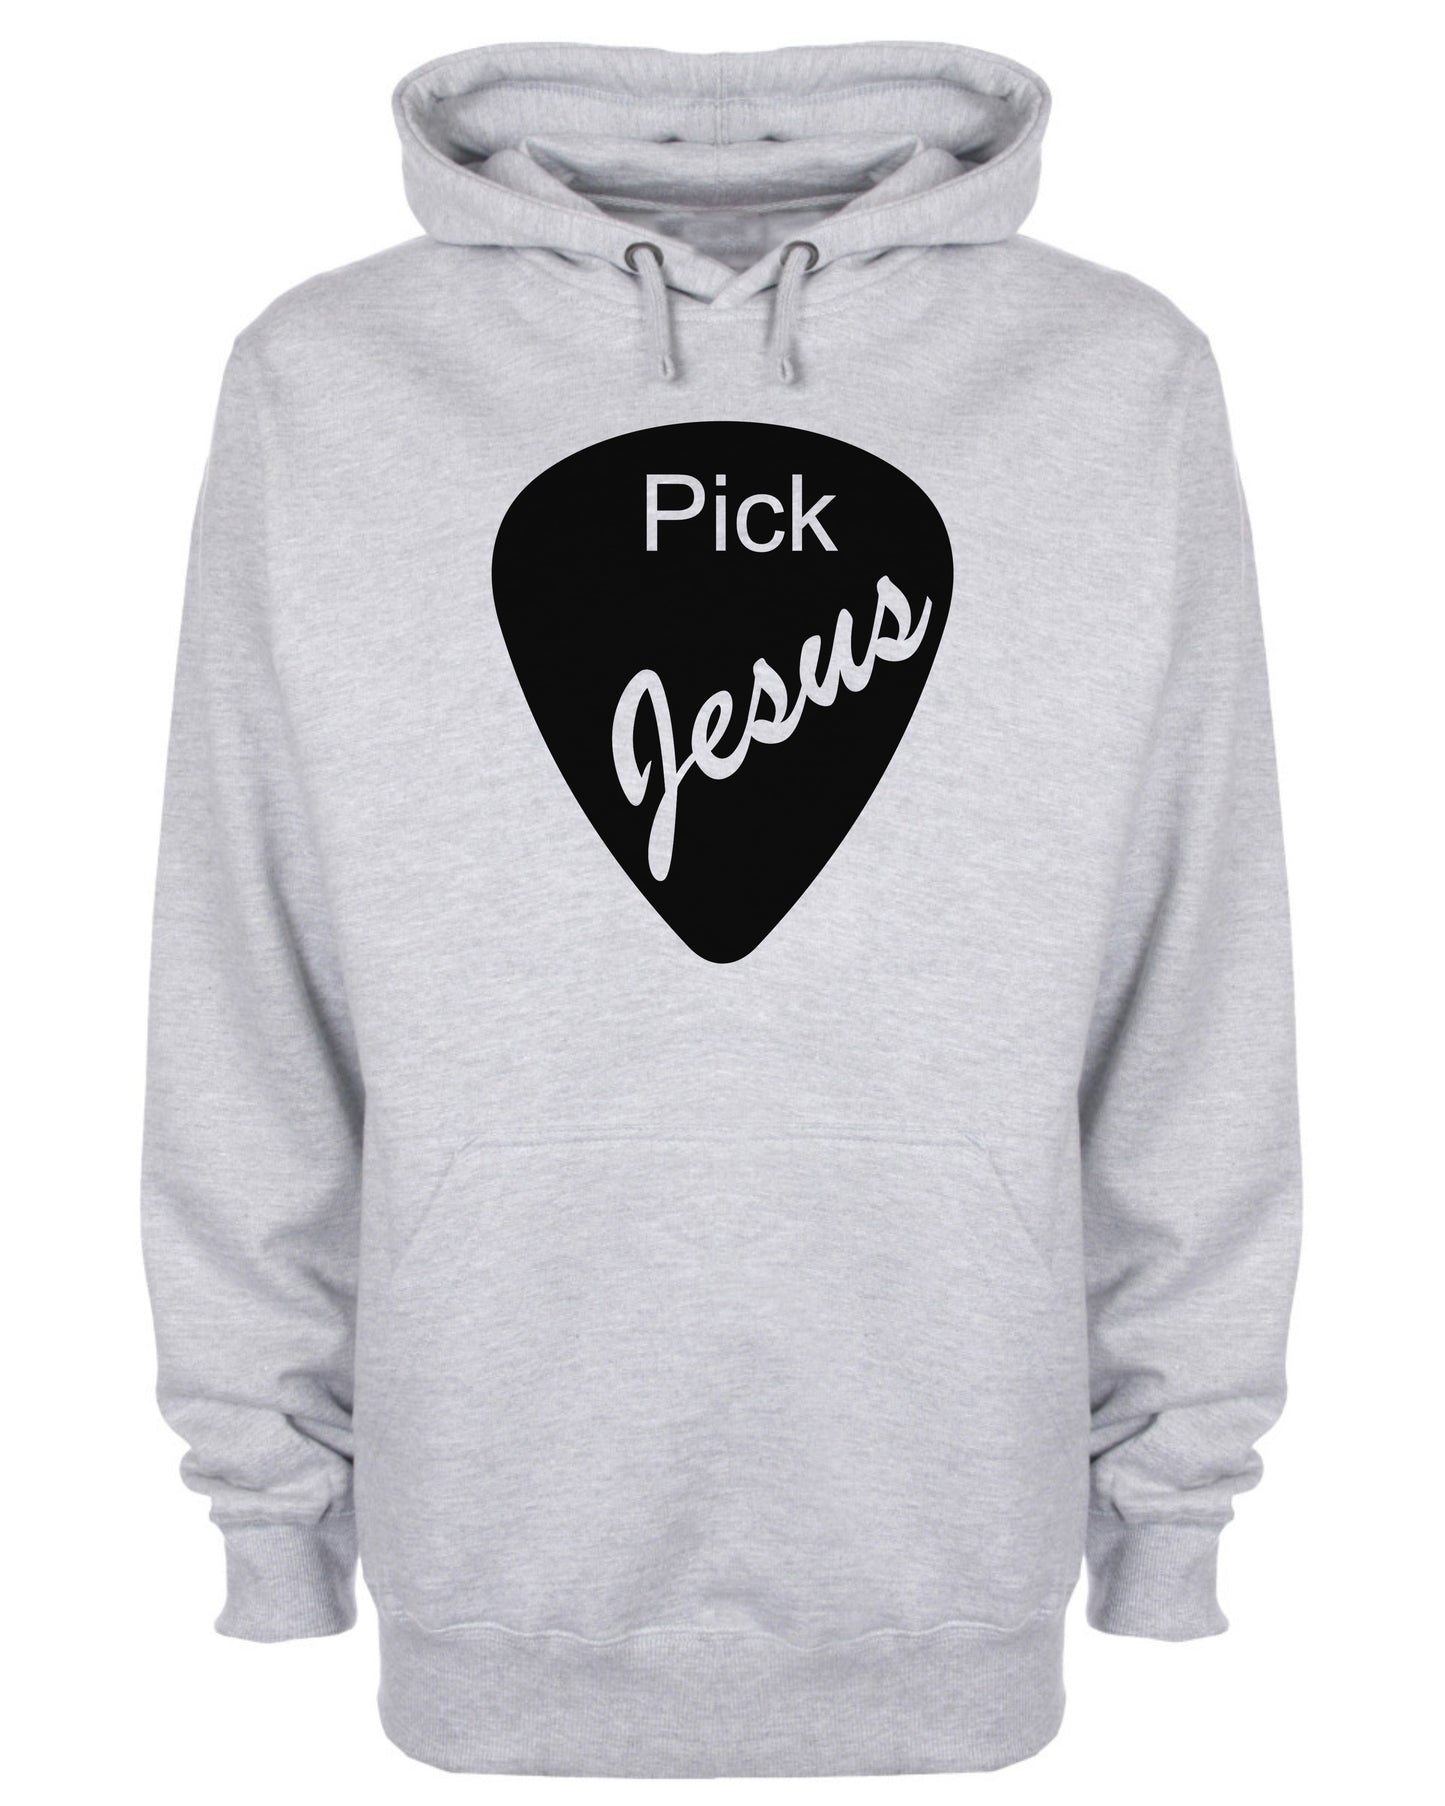 Pick Jesus Hoodie Christian Jesus Christ Sweatshirt